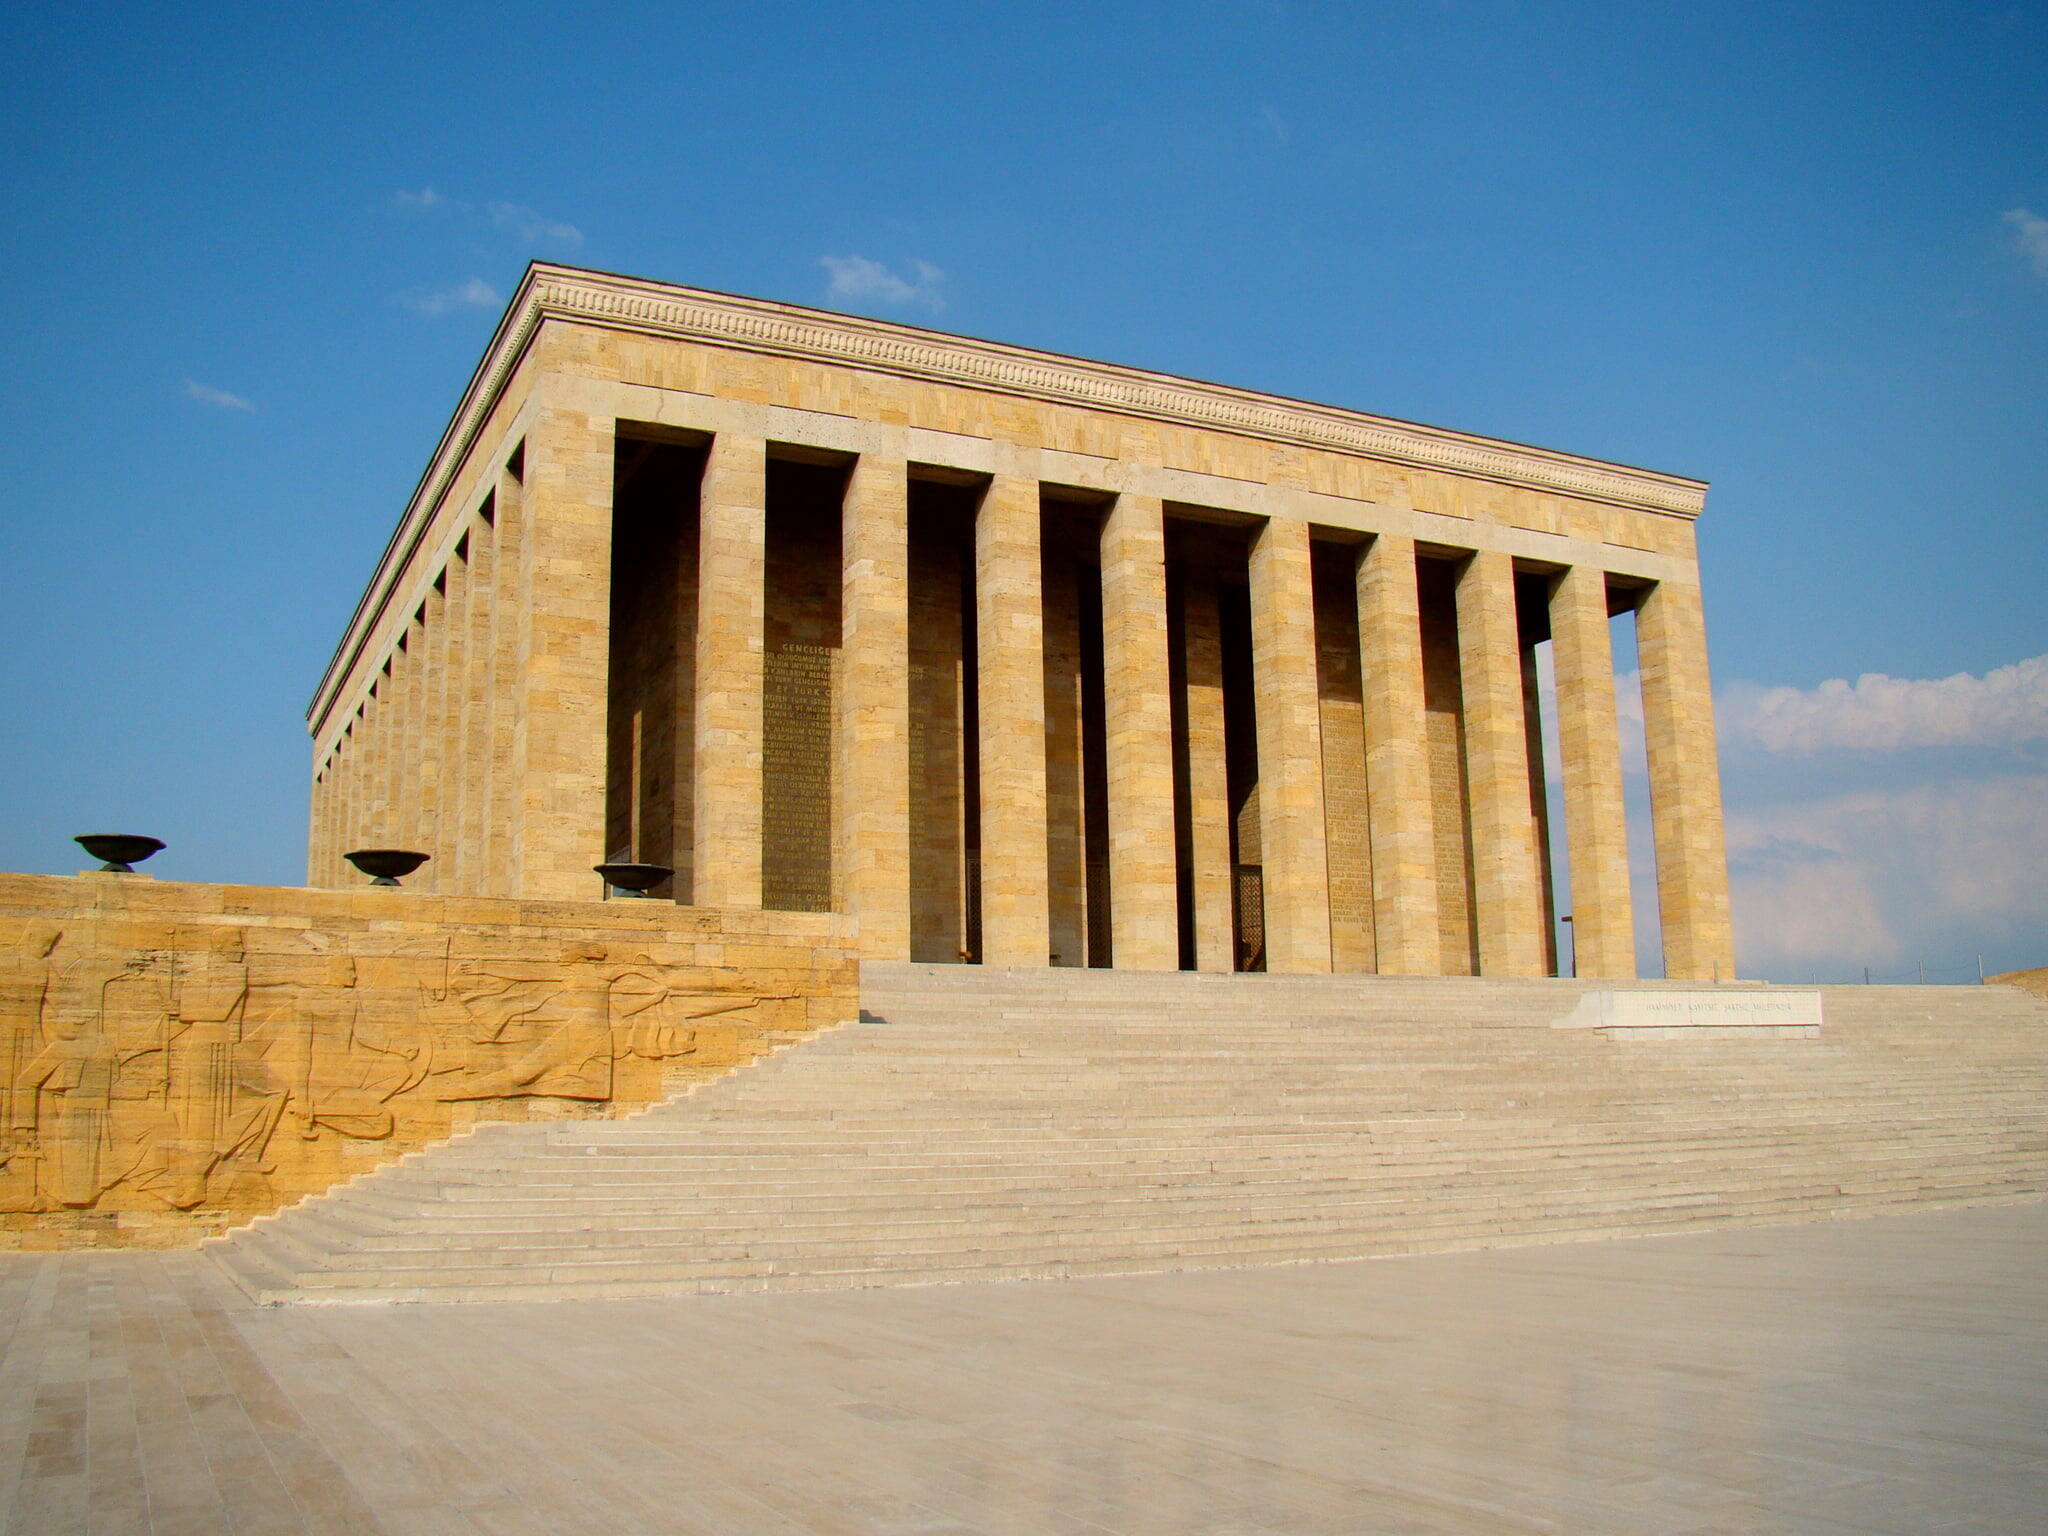 Ankara - Anıtkabir, the mausoleum of Kemal Ataturk, located in Ankara, Turkey.